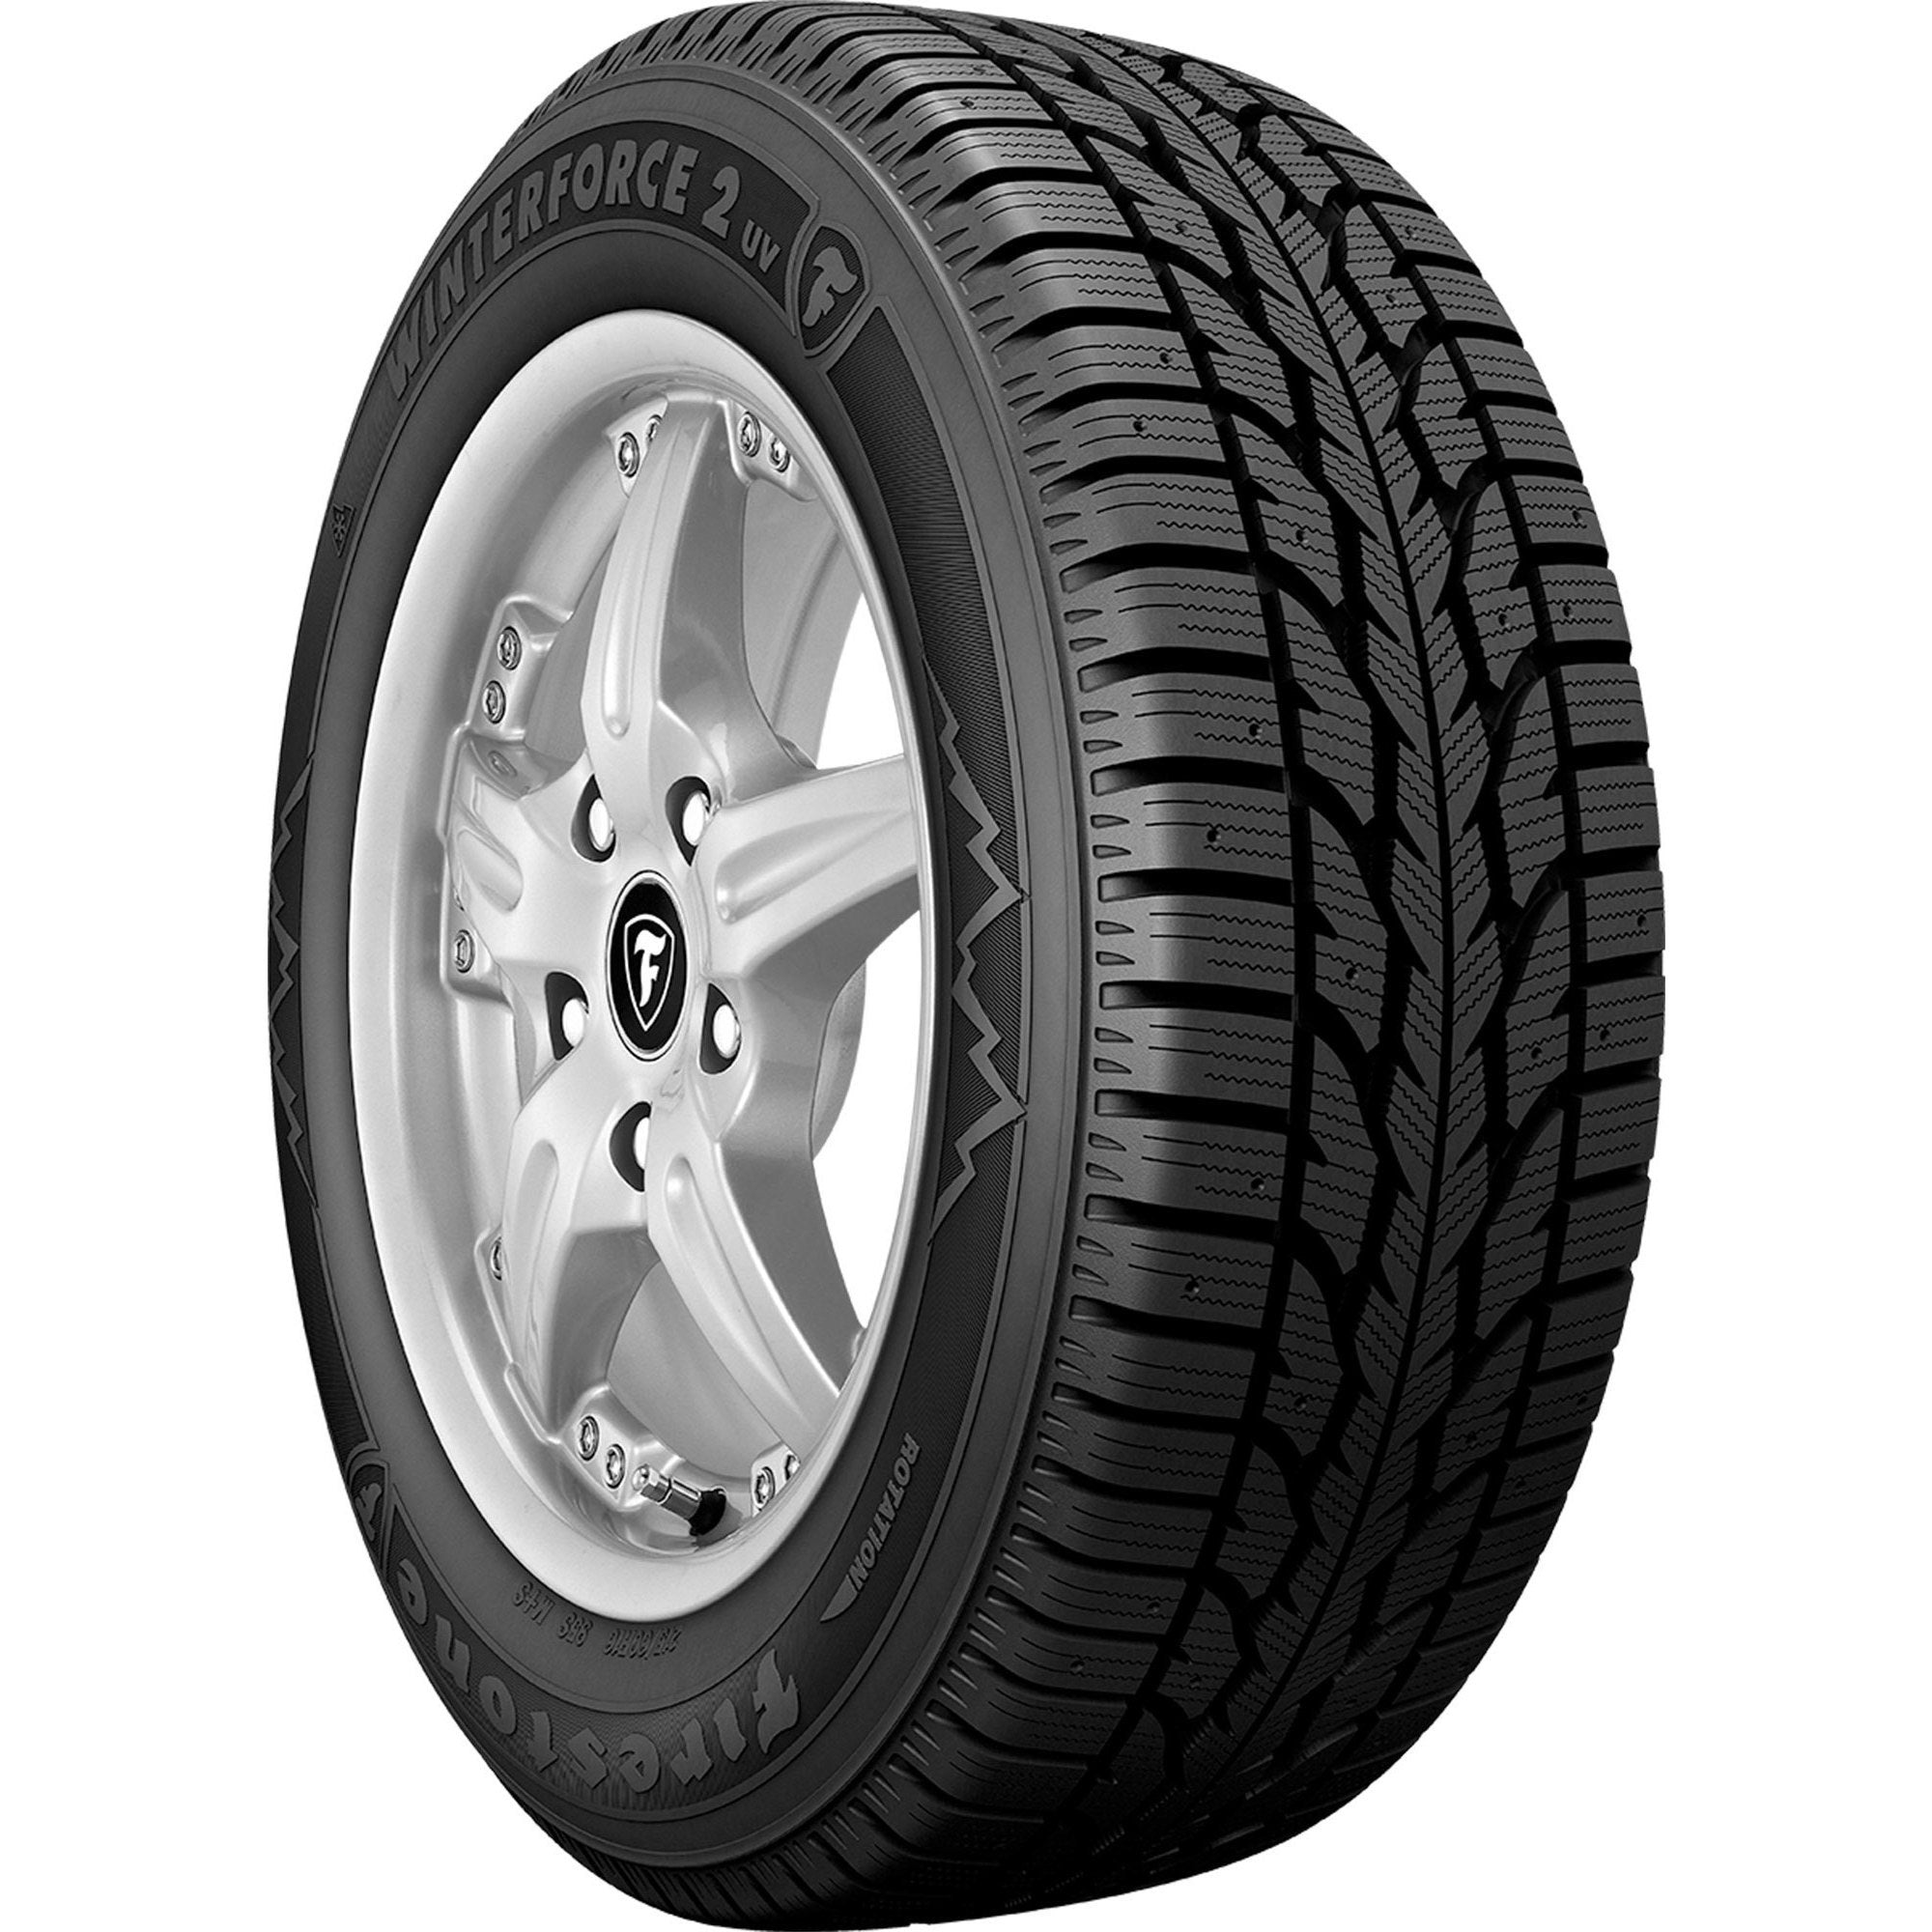 FIRESTONE WINTERFORCE2 UV 255/65R18 (31.1X10R 18) Tires